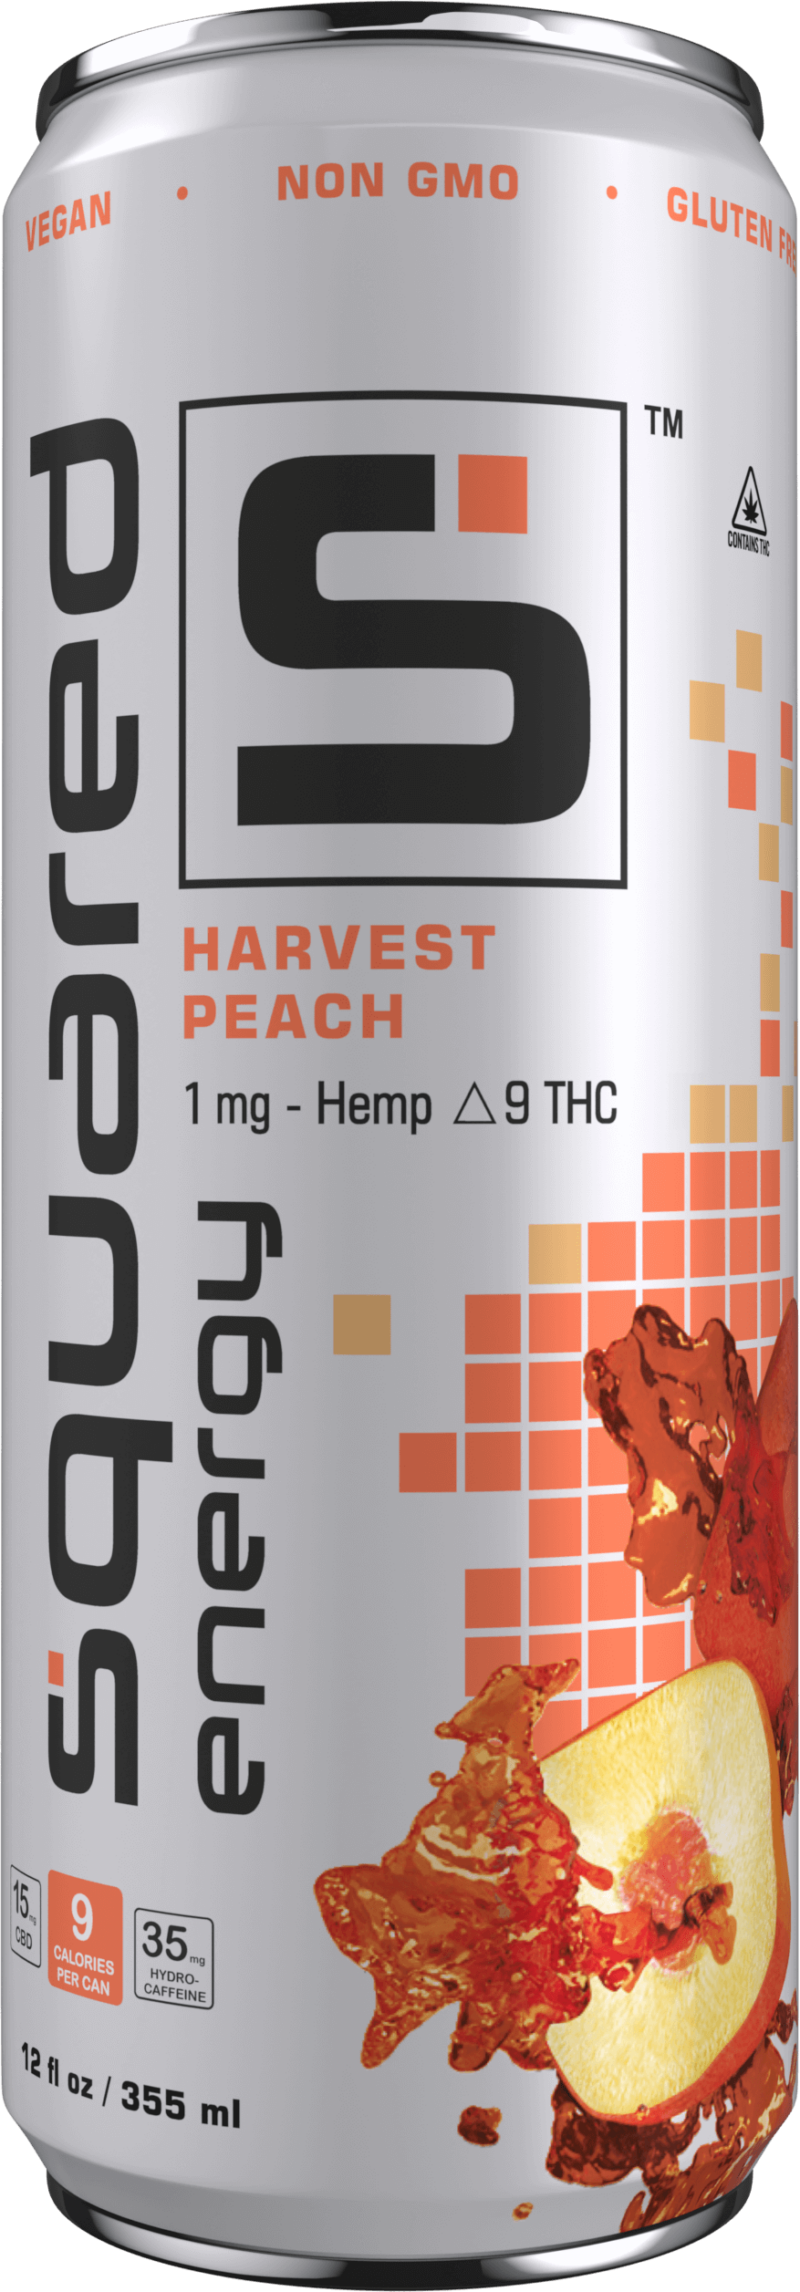 12 ounce sleek aluminum can of Harvest Peach by Squared Energy